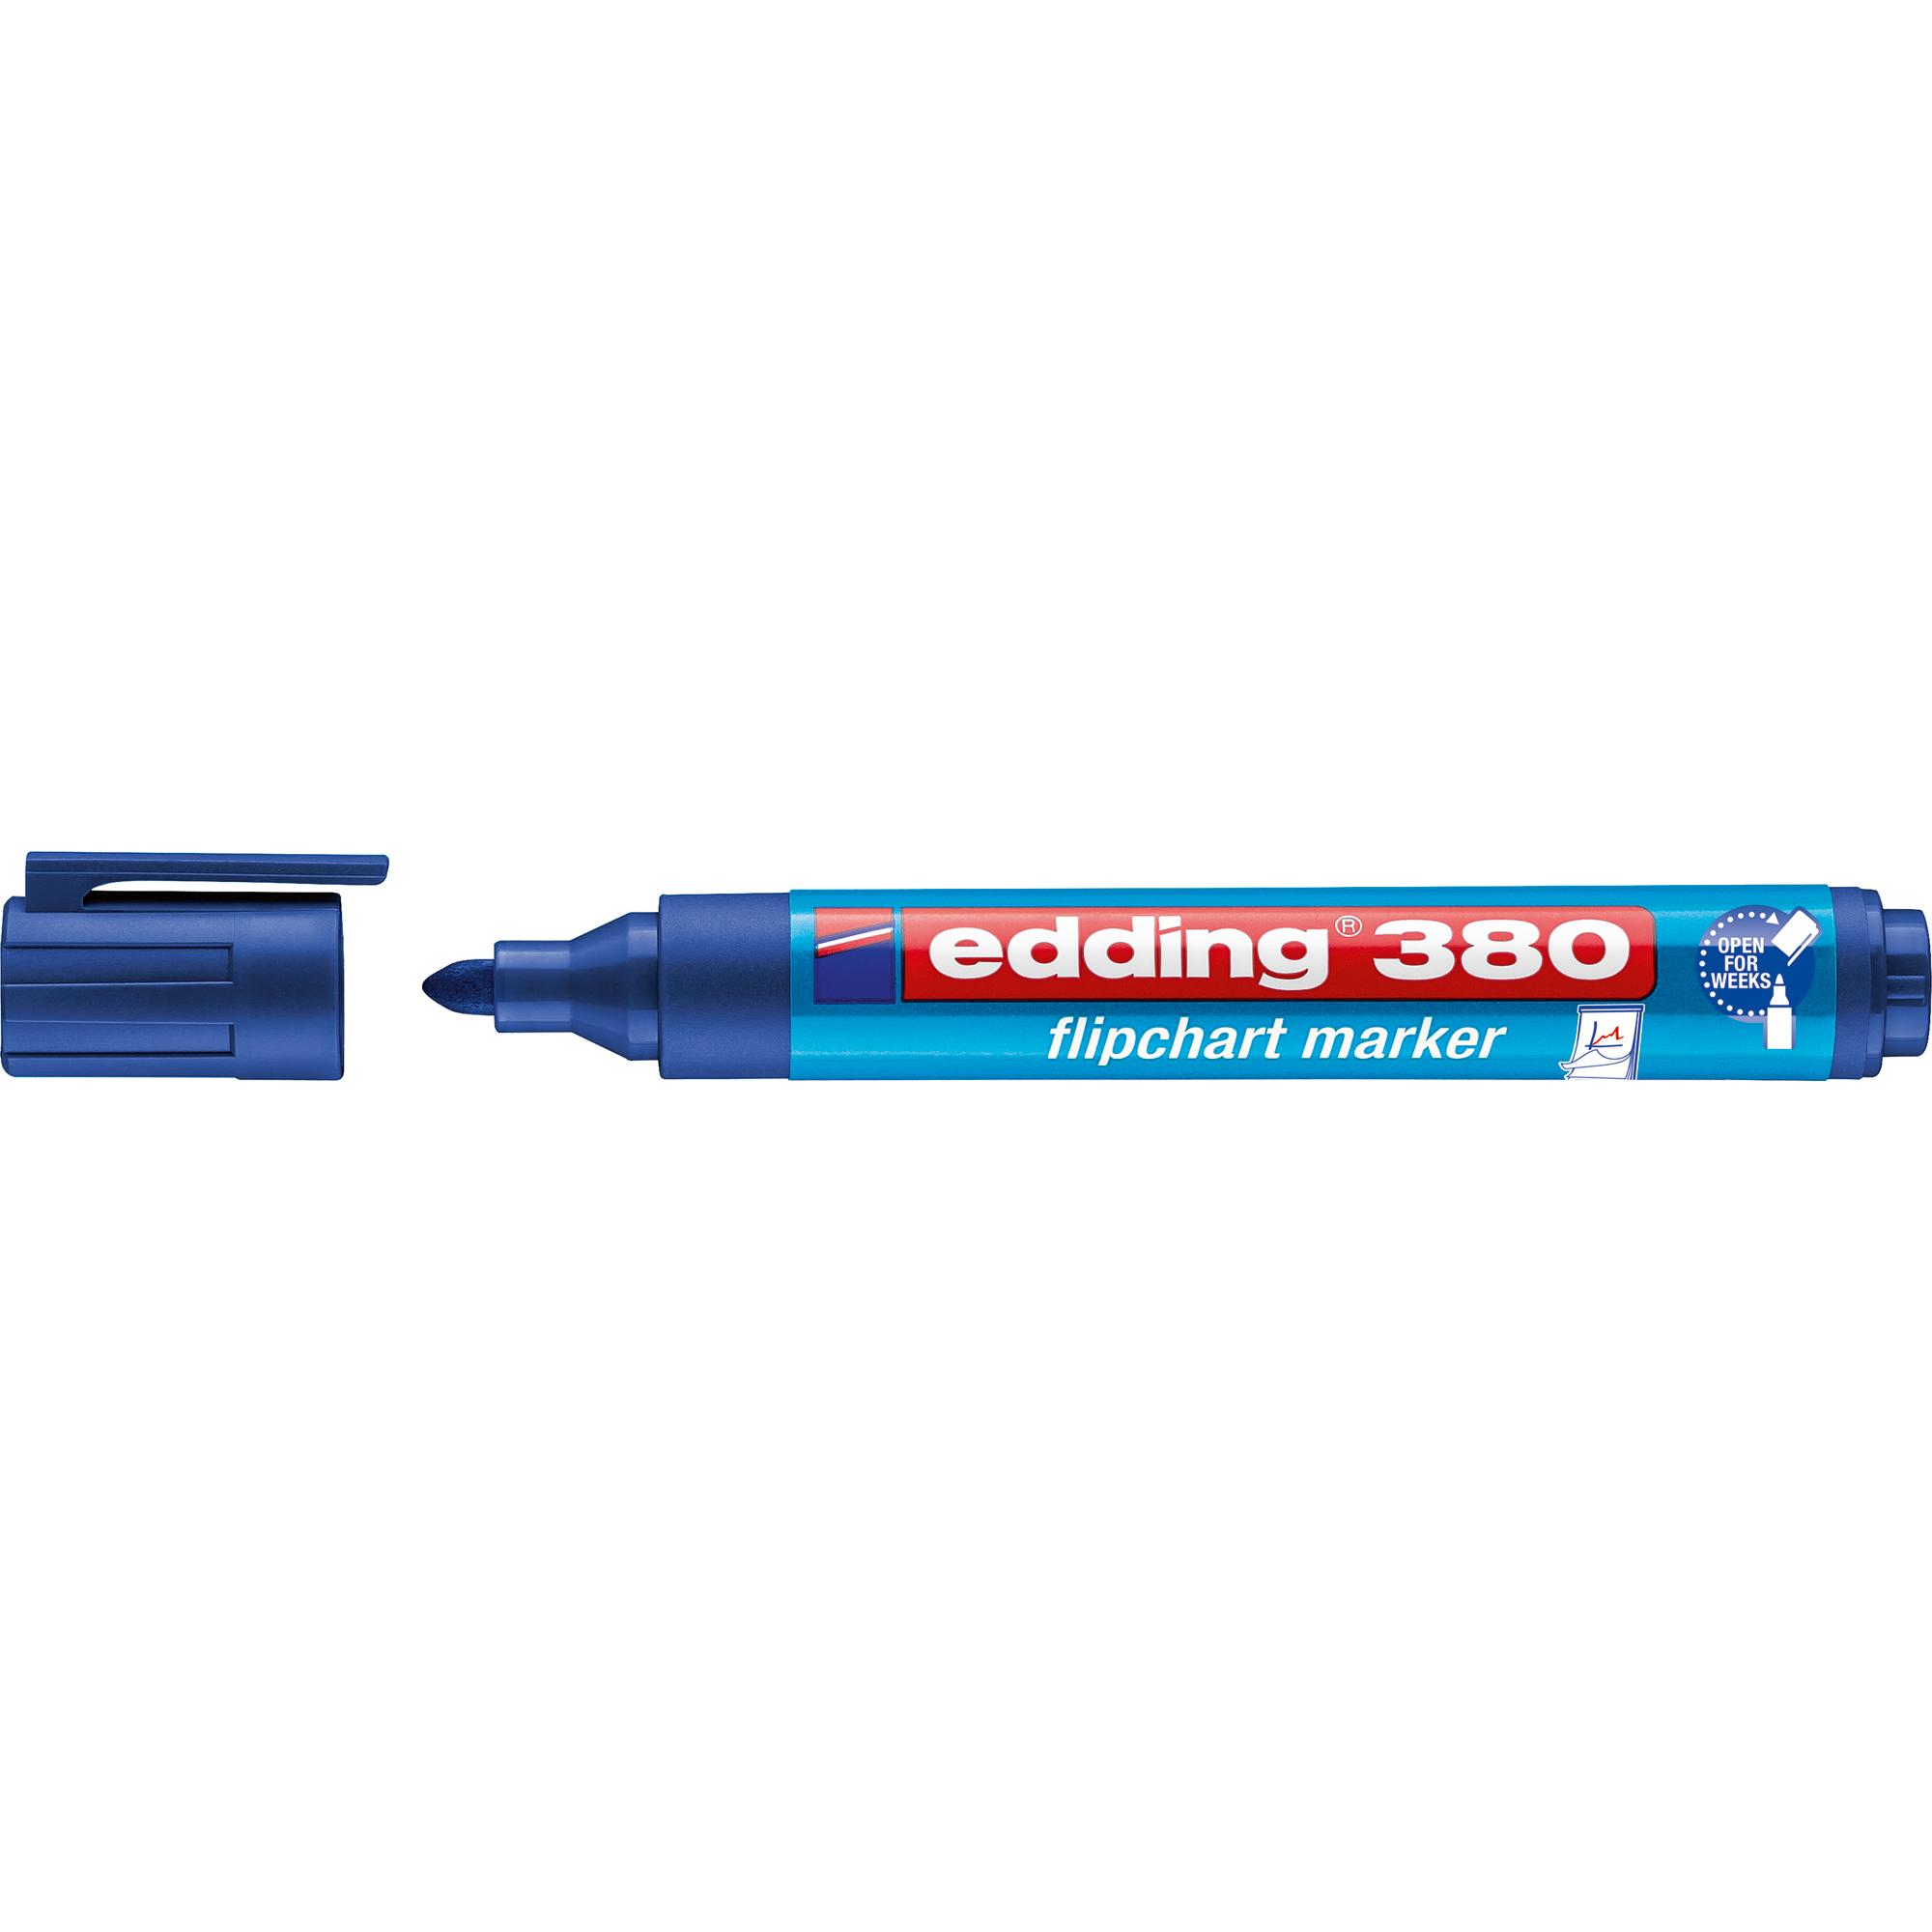 edding Flipchartmarker 380 blau